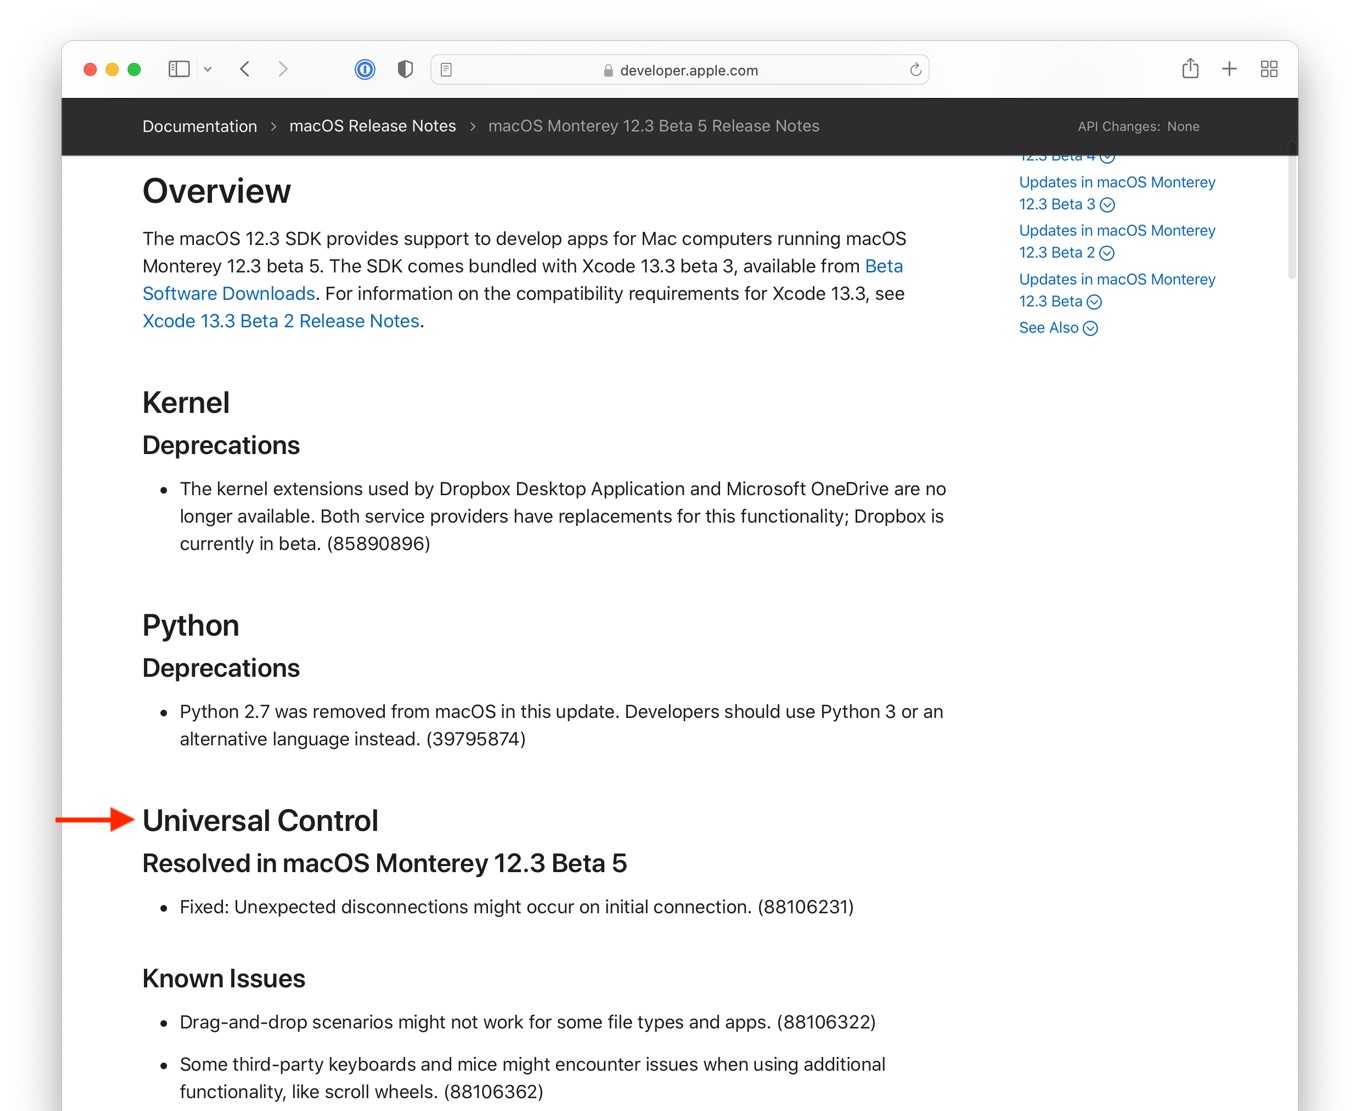 Resolved in macOS Monterey 12.3 Beta 5